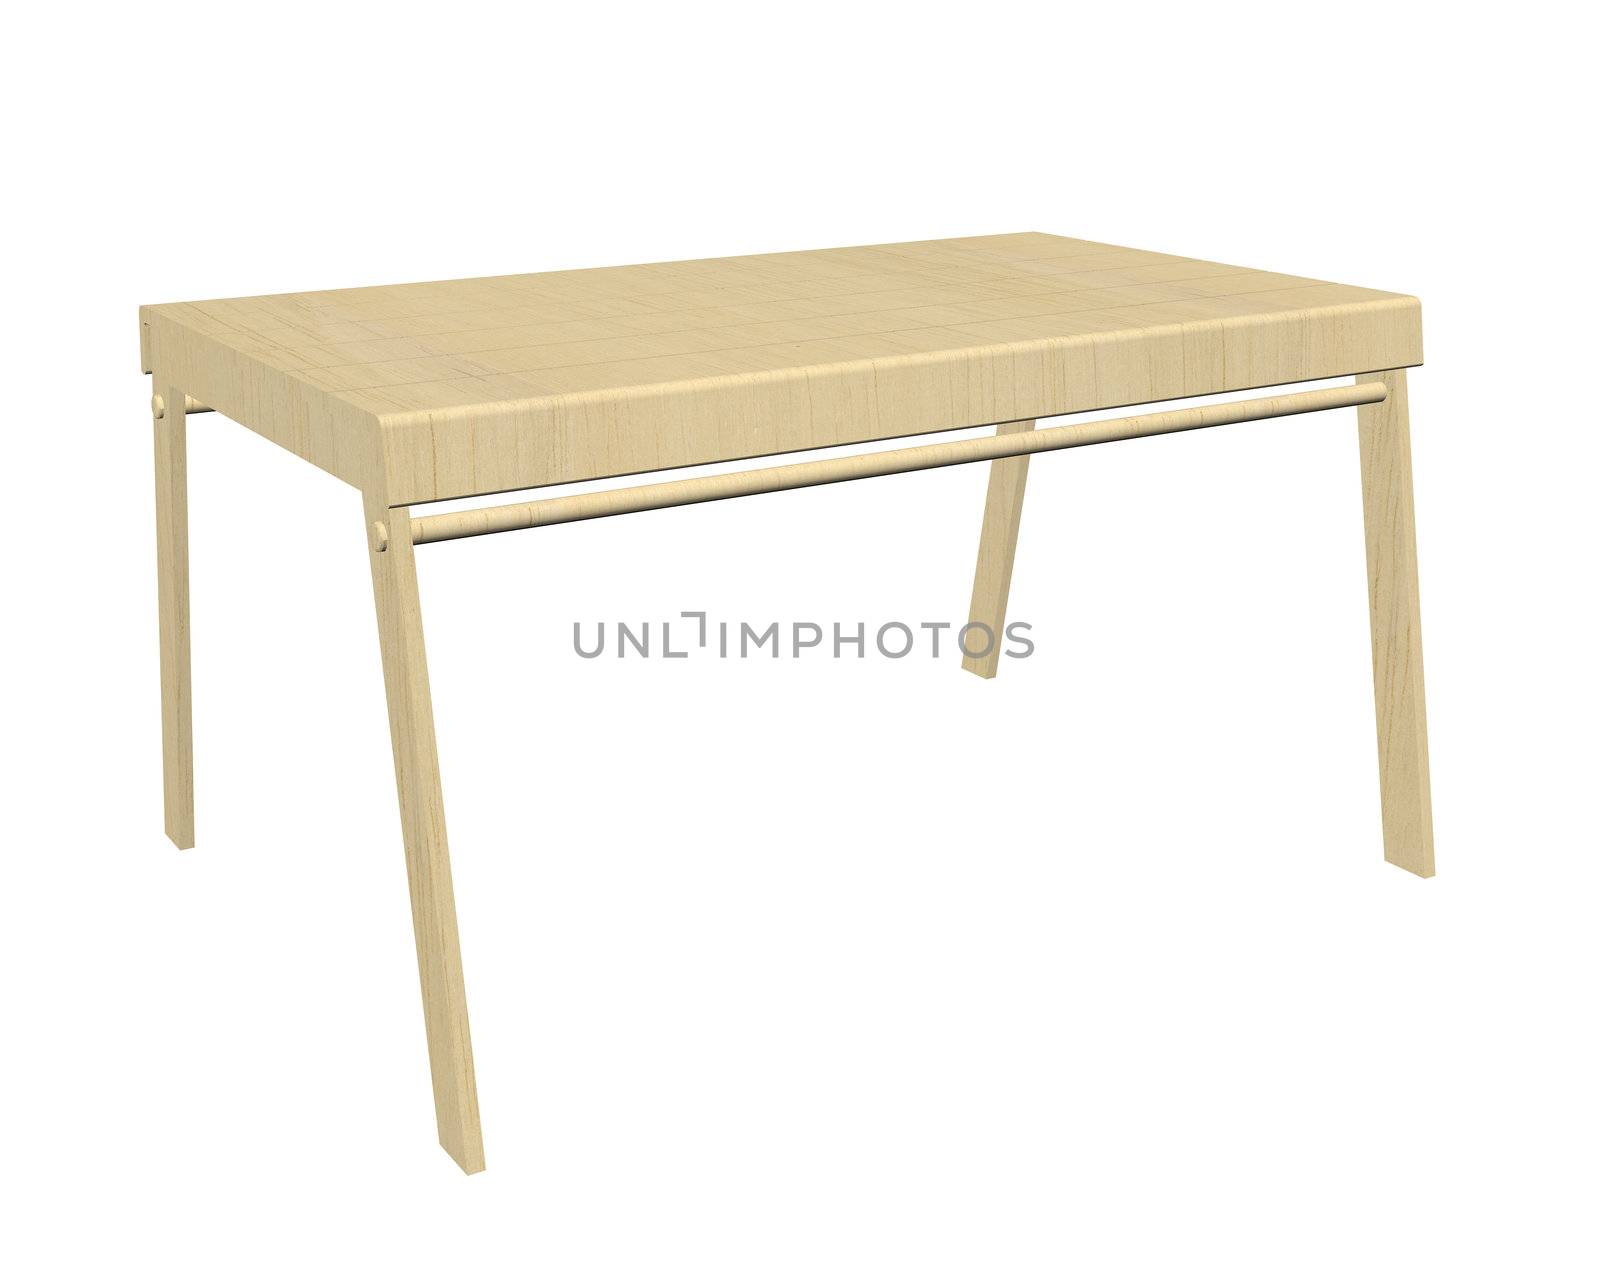 Wooden table, light natural finish, 3D vector illustration